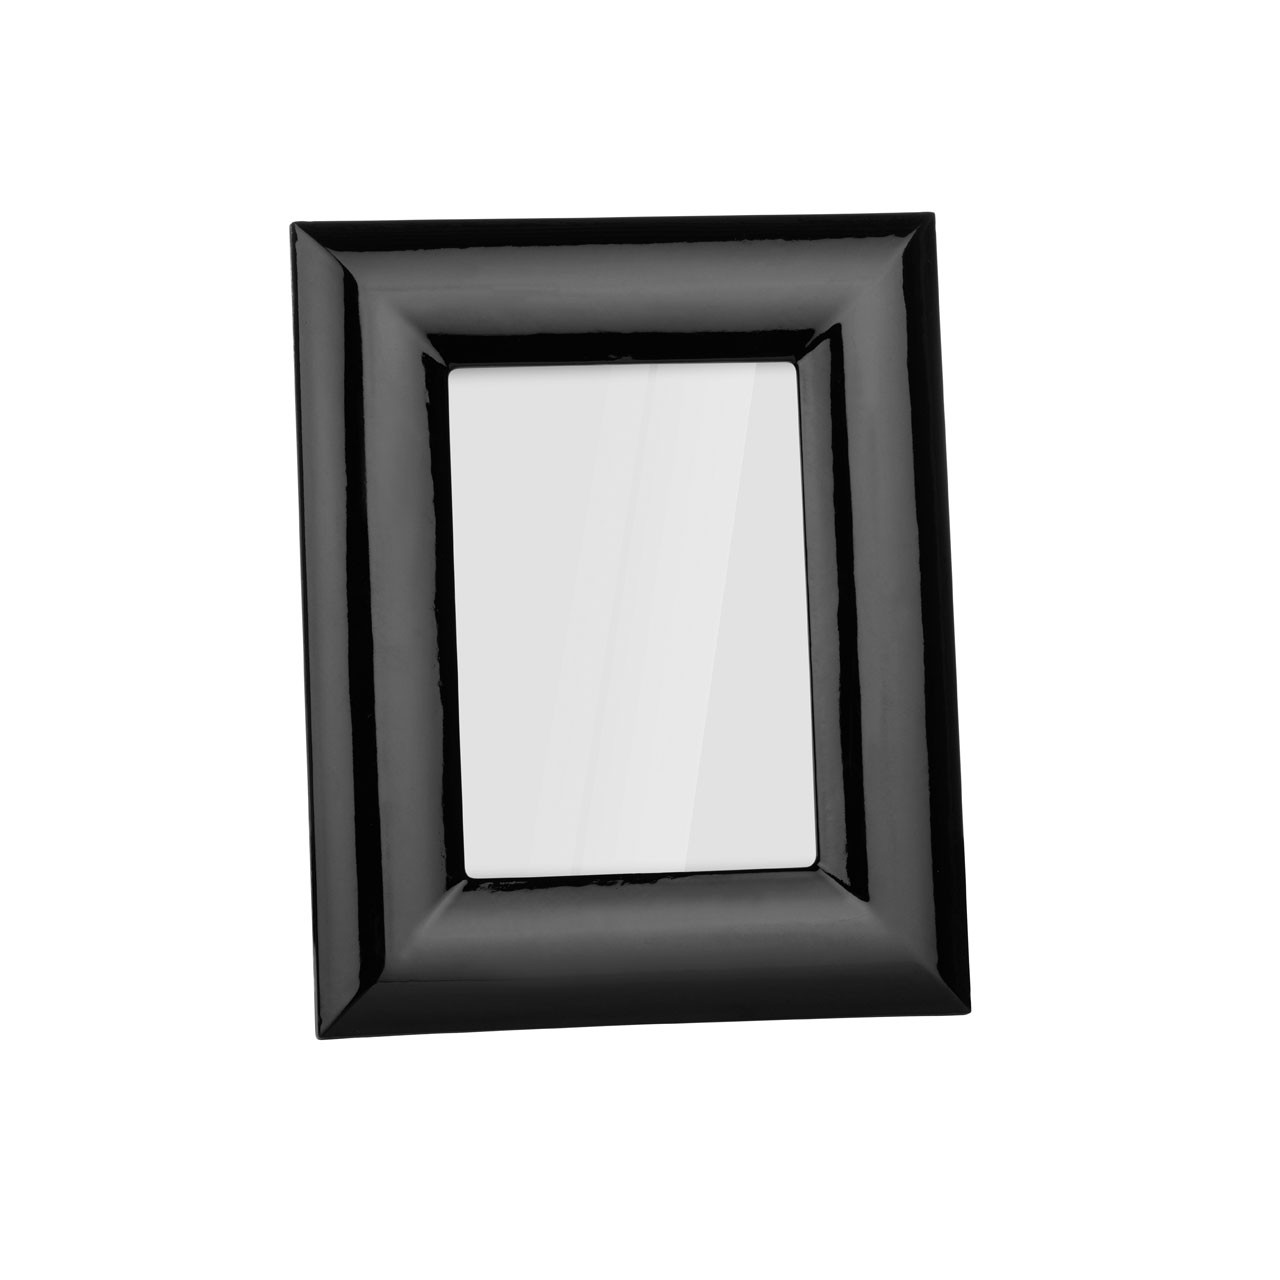 High Gloss Photo Frame, 5 x 7 Inches - Black